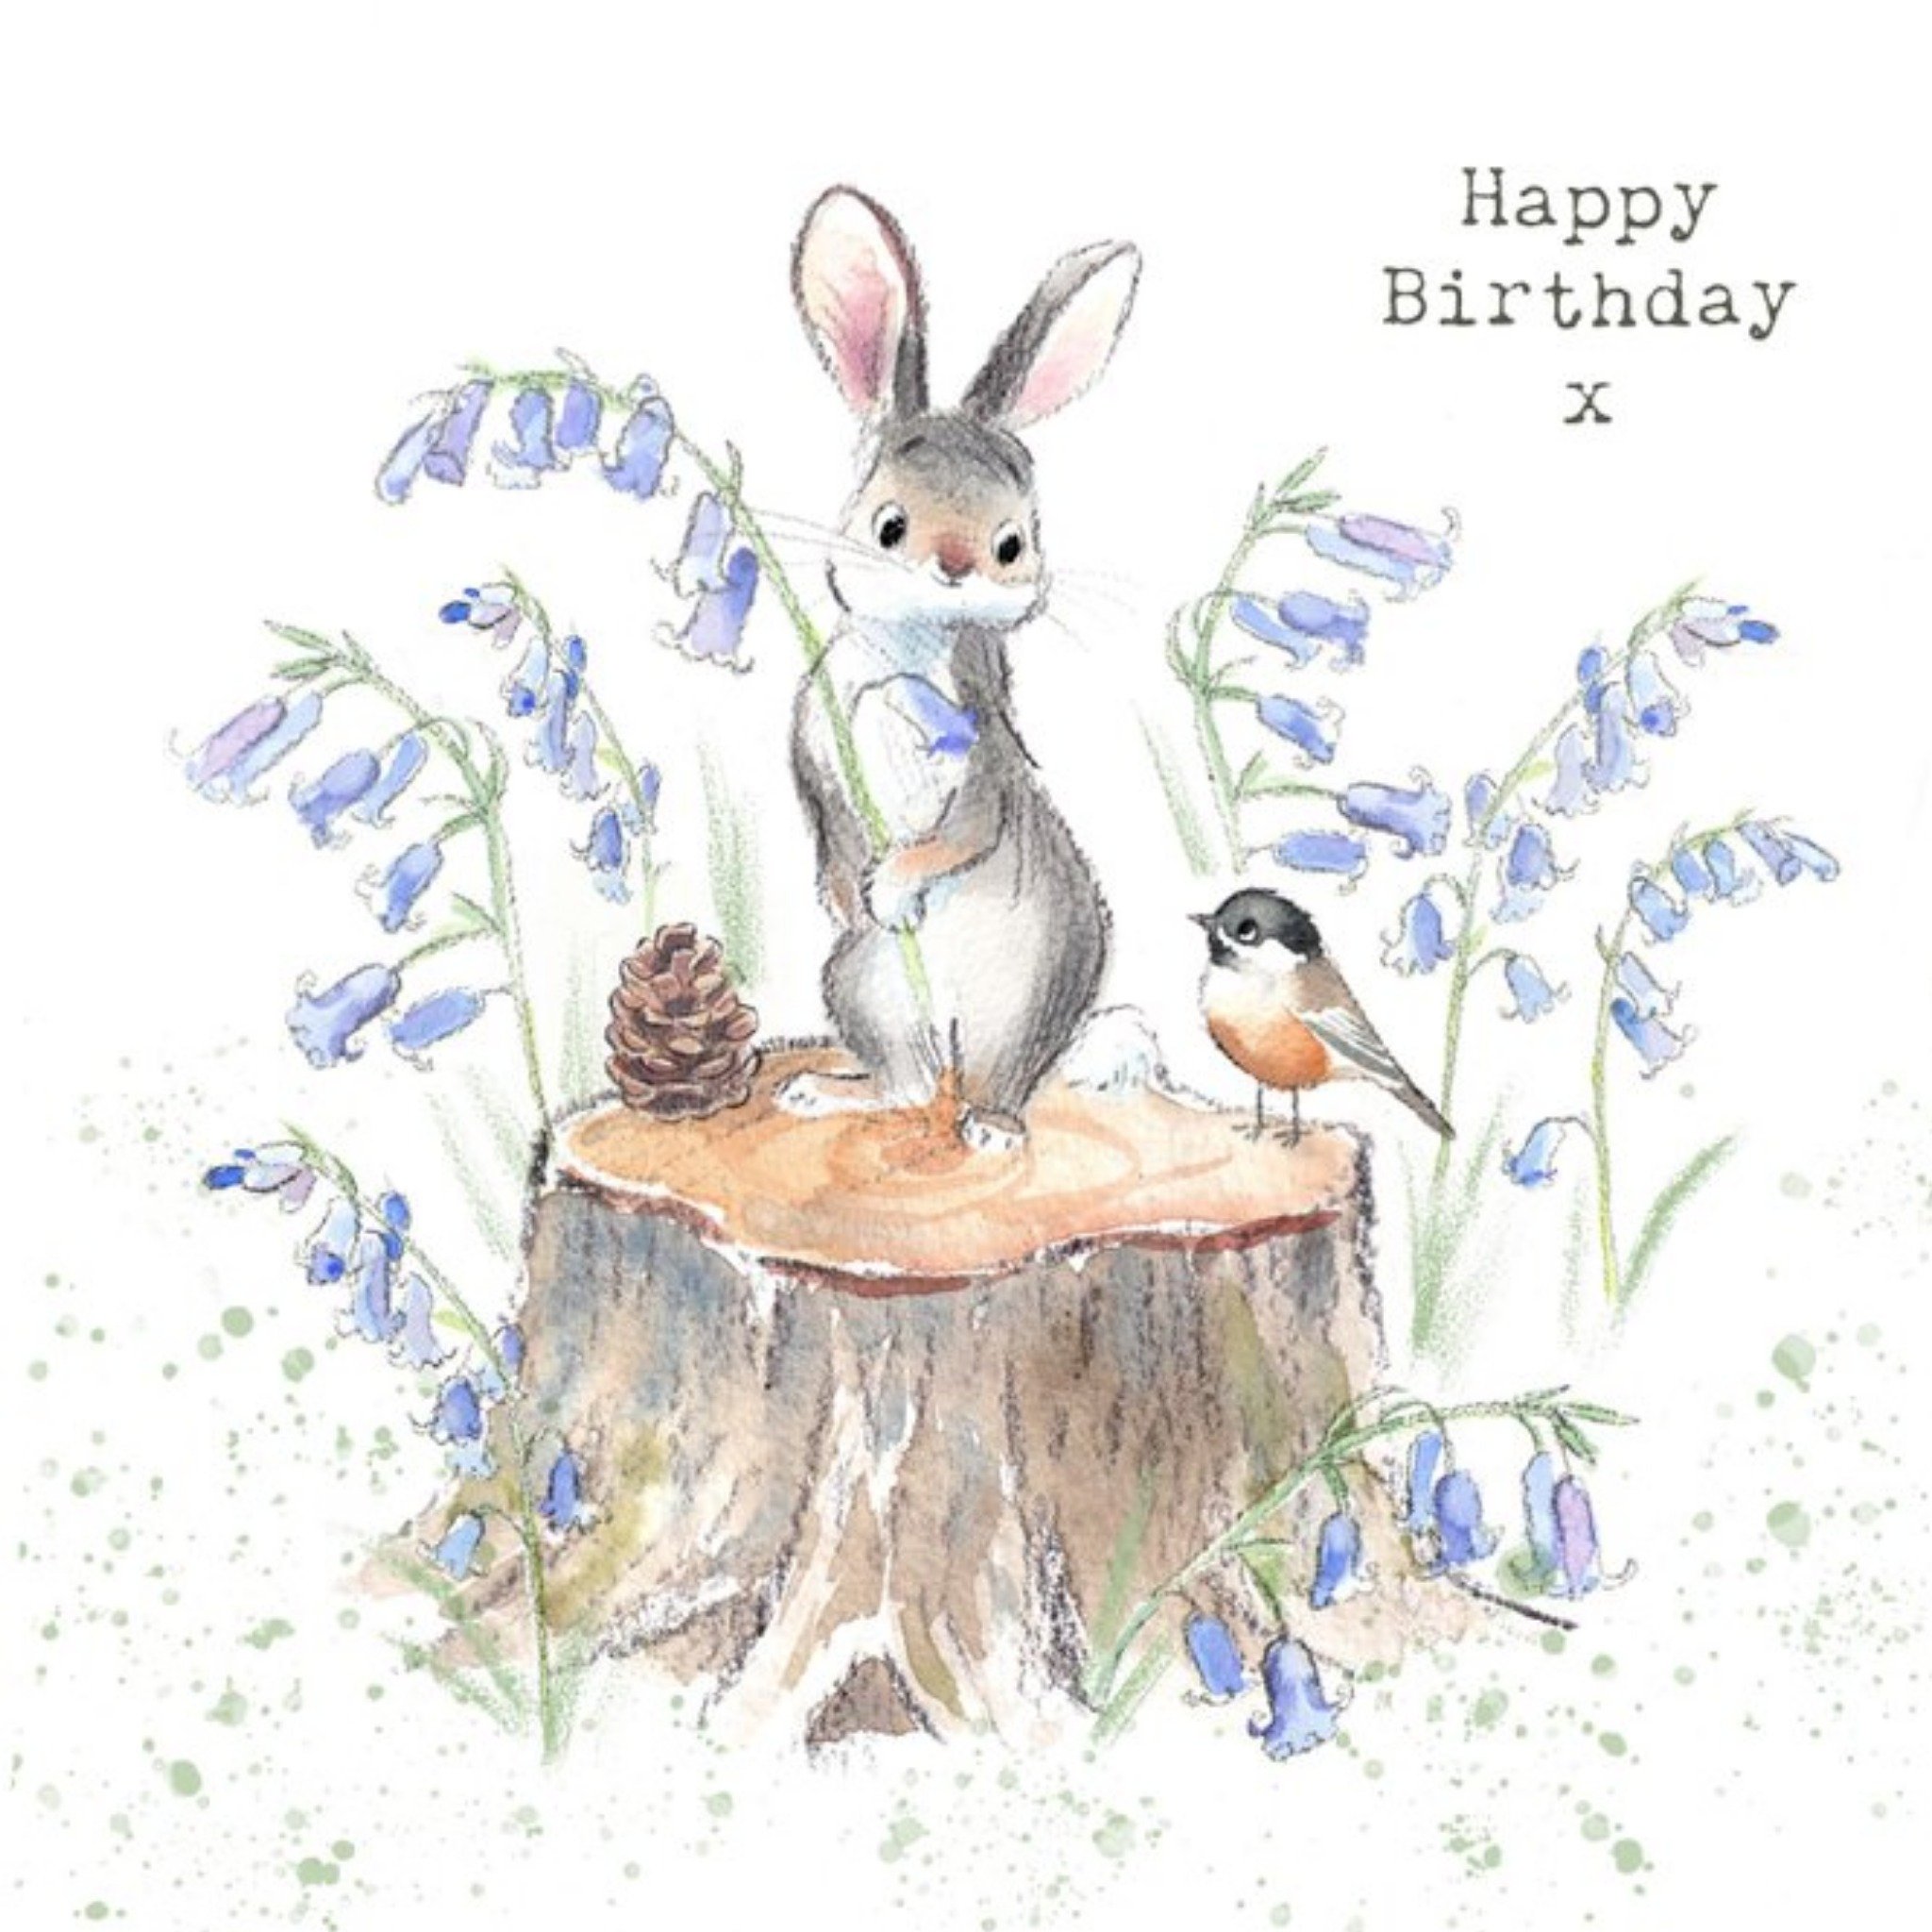 Moonpig Illustration Of A Cute Rabbit And A Bird Sitting On A Tree Stump Among Bluebells Birthday Ca